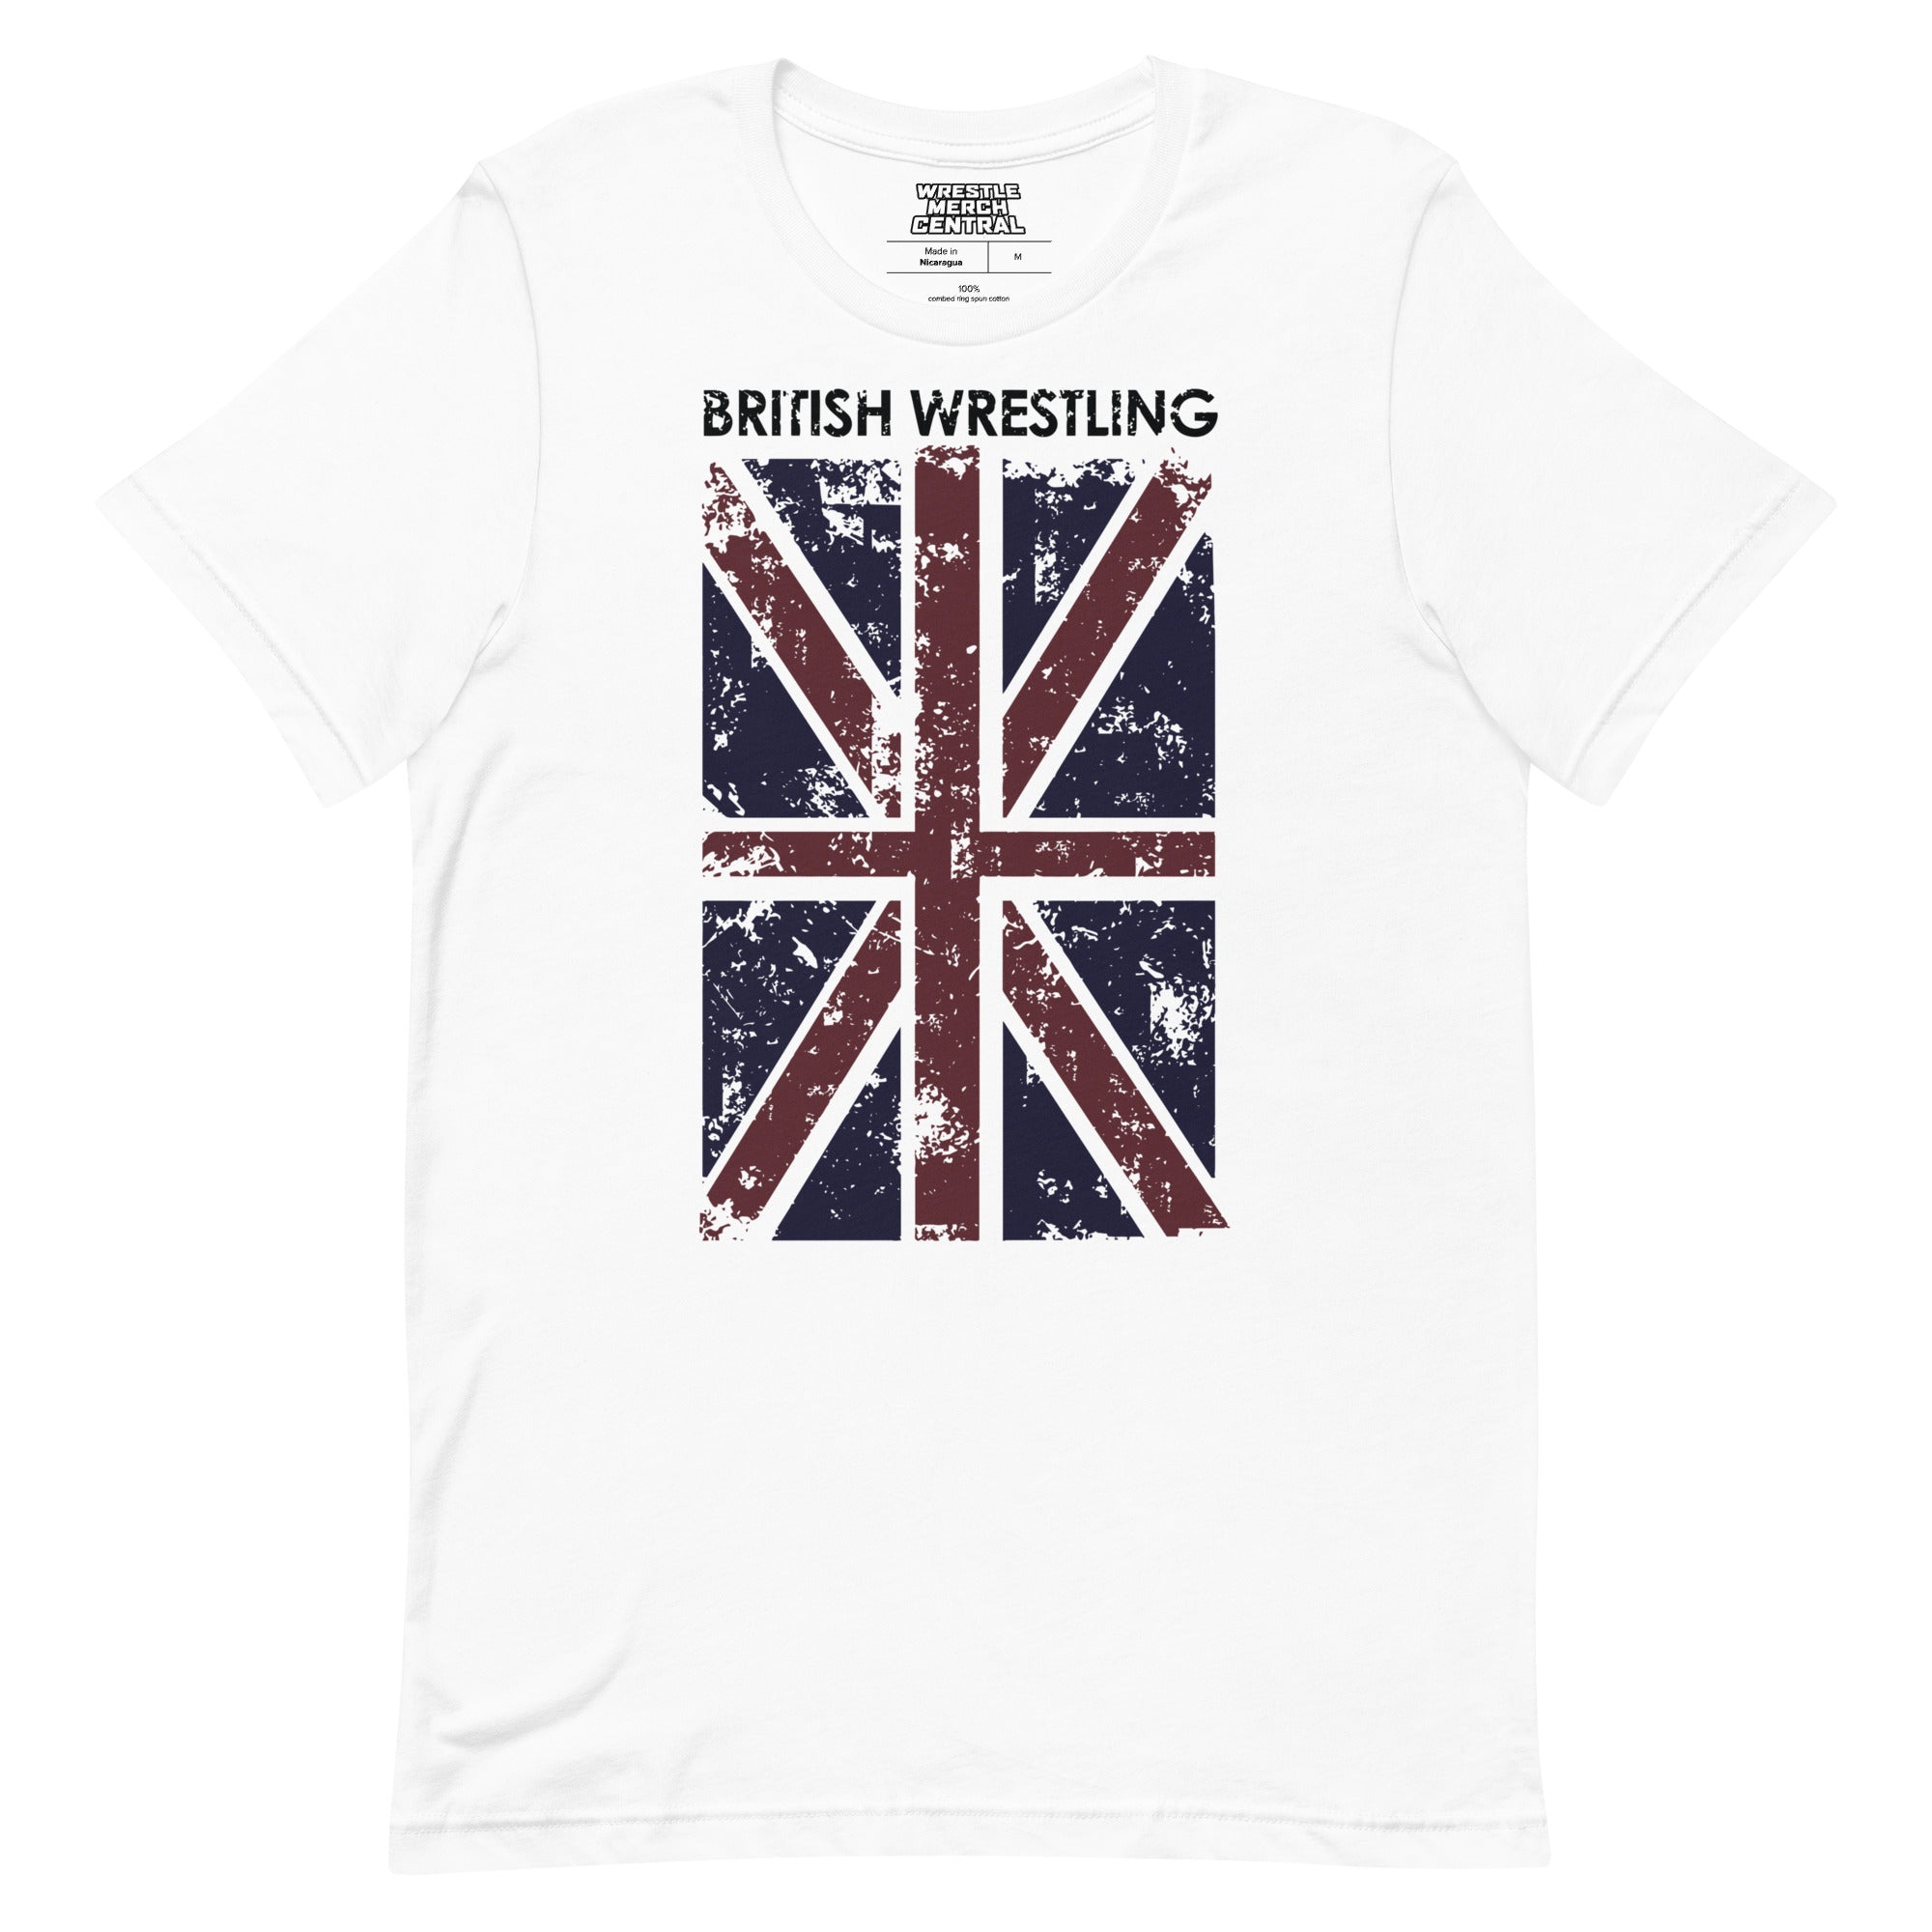 Let's Wrestle British Wrestling Unisex T-Shirt